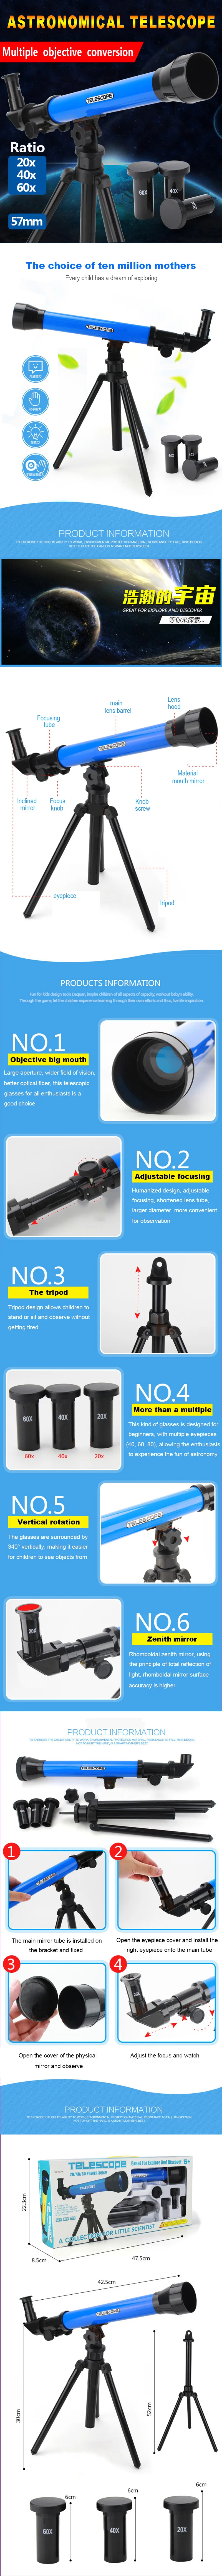 telescope binoculars astronomical telescope educational toy